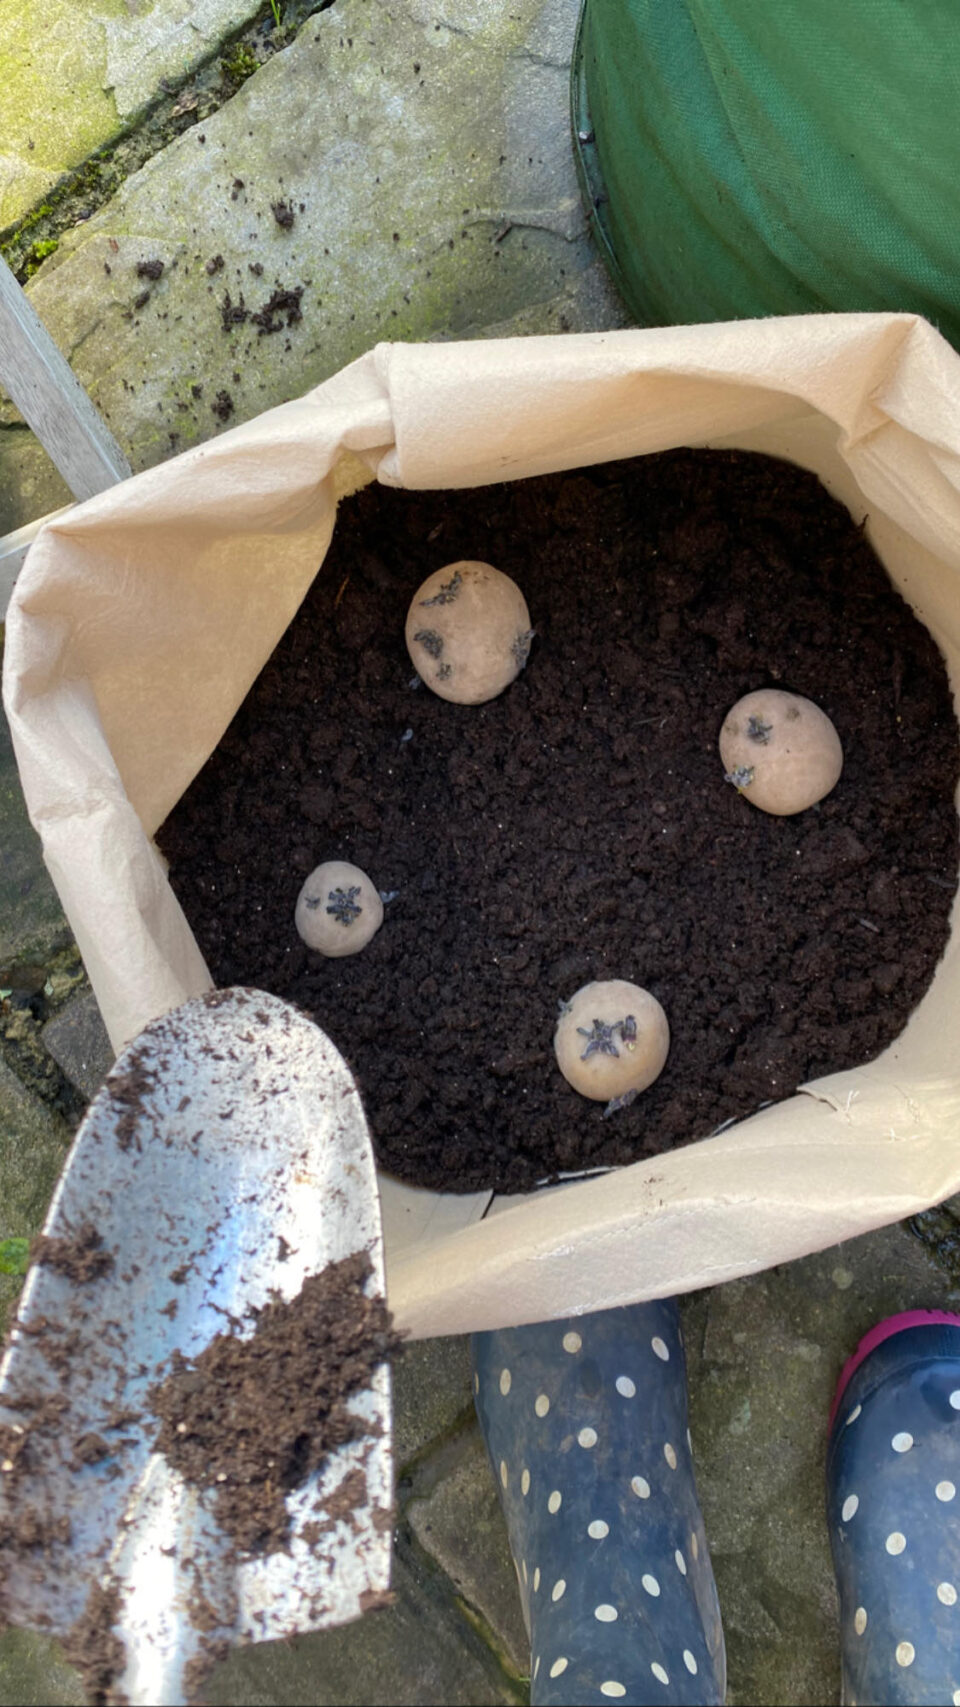 seed potatoes going into a potato sack